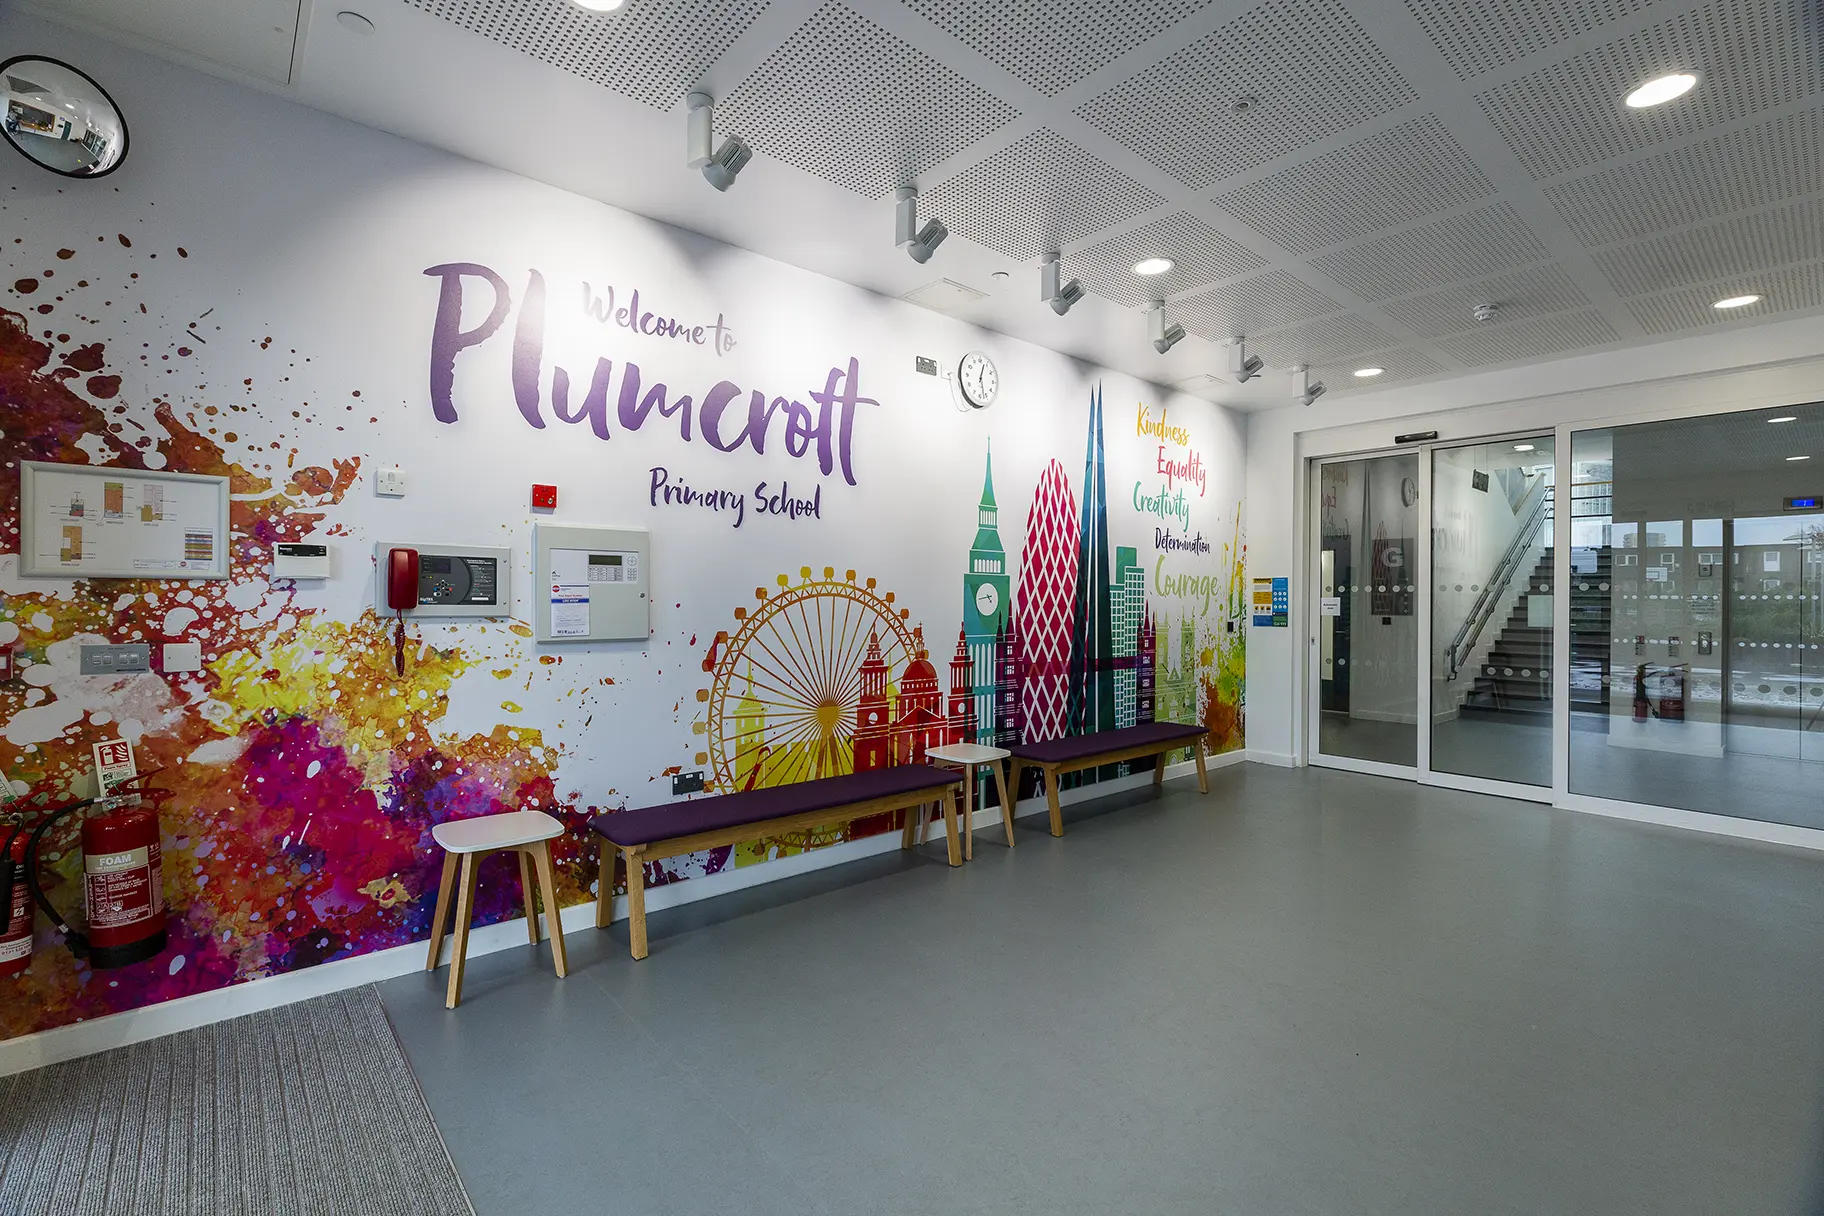 Plumcroft reception area school wall art